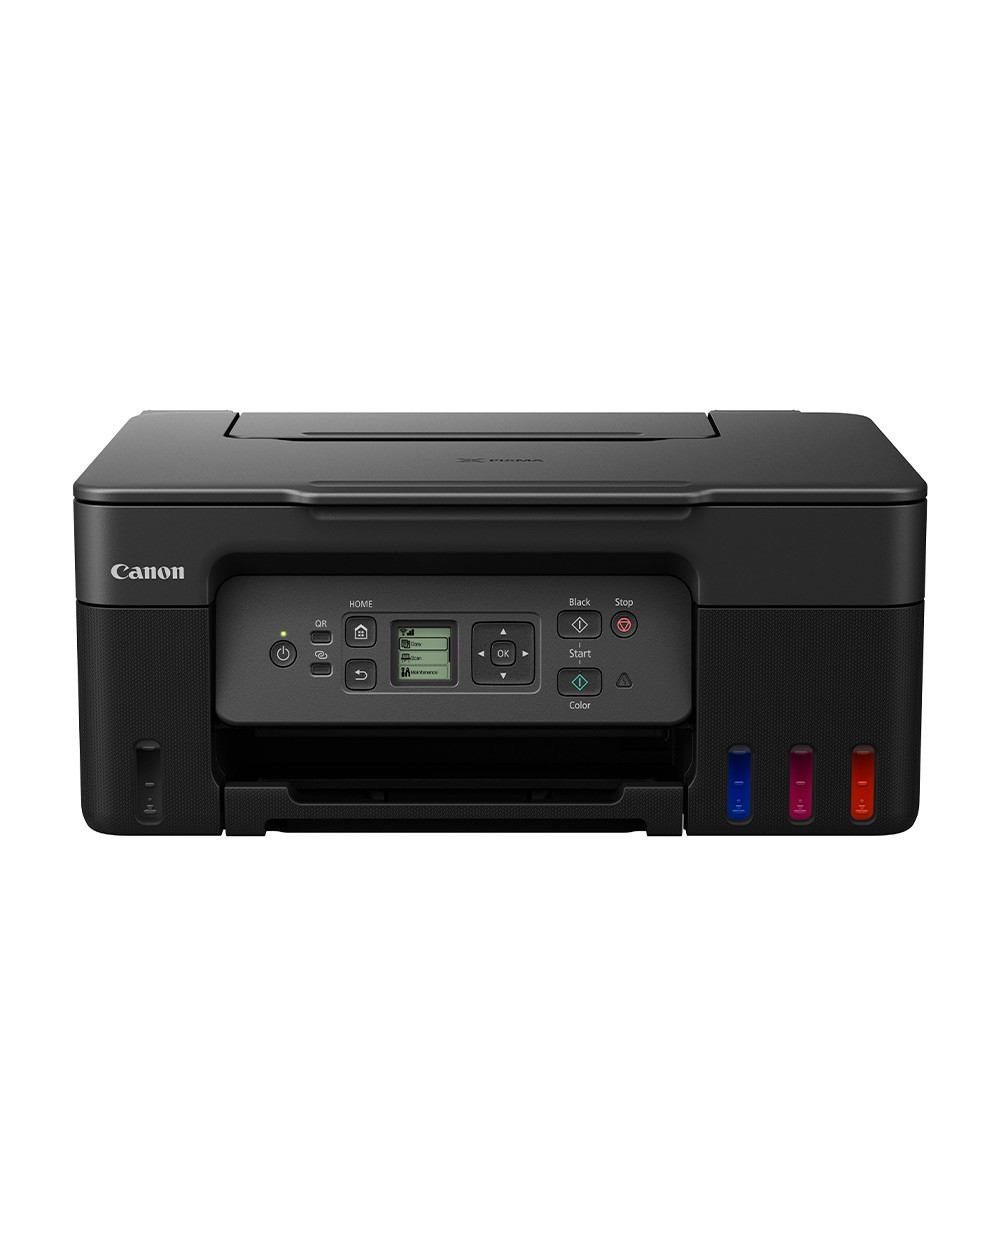 Equipo multifuncion canon pixma g3570 tinta color 11 ppm negro 6 ppm color a4 impresora escaner copiadora